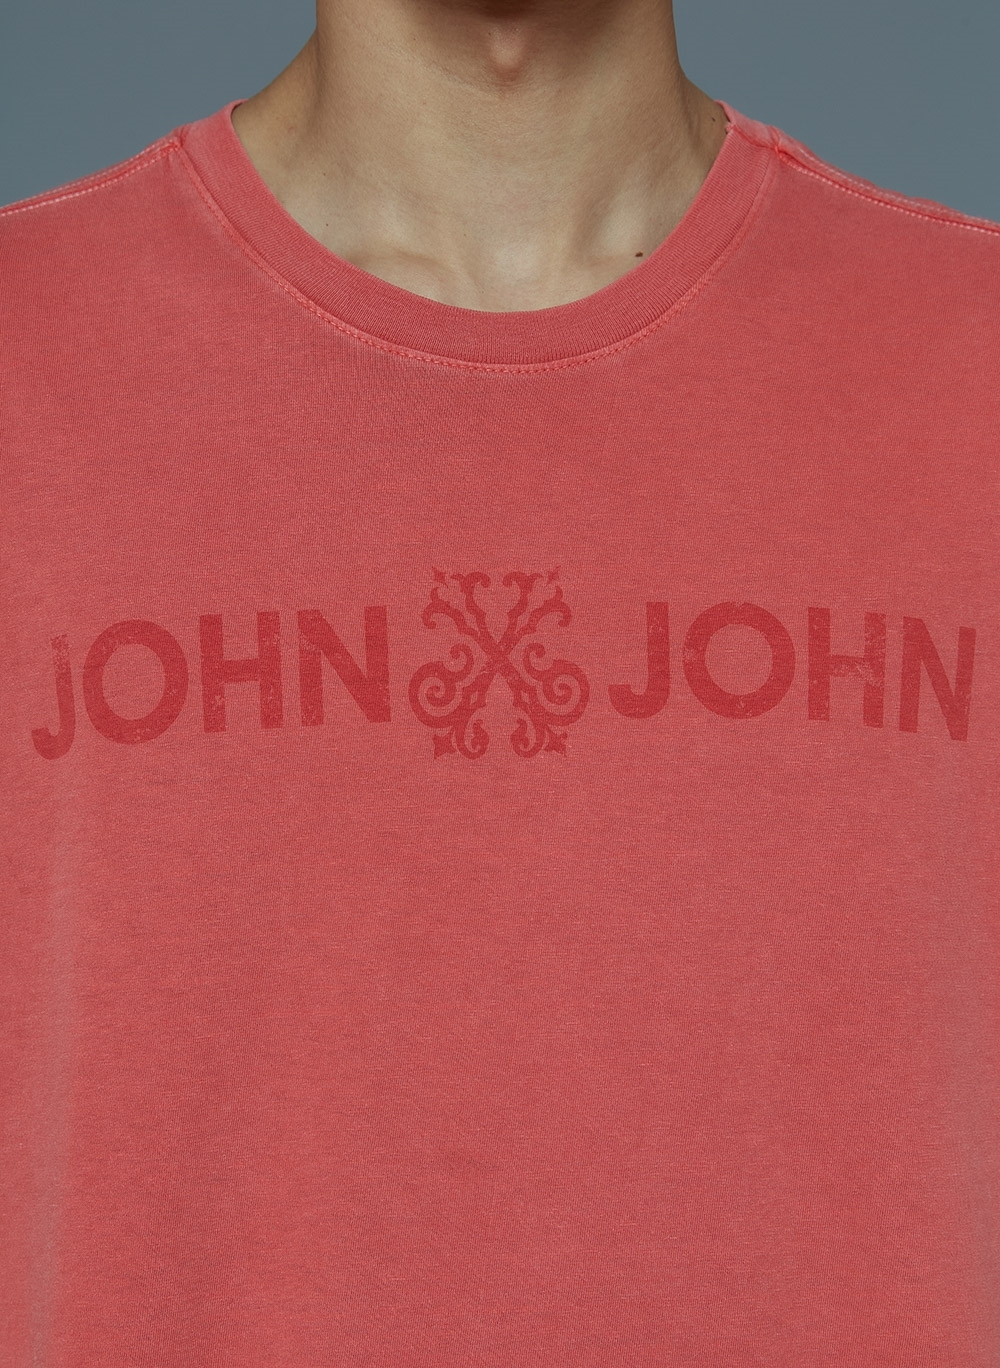 Camiseta John John Basic Logo Masculina - Branco